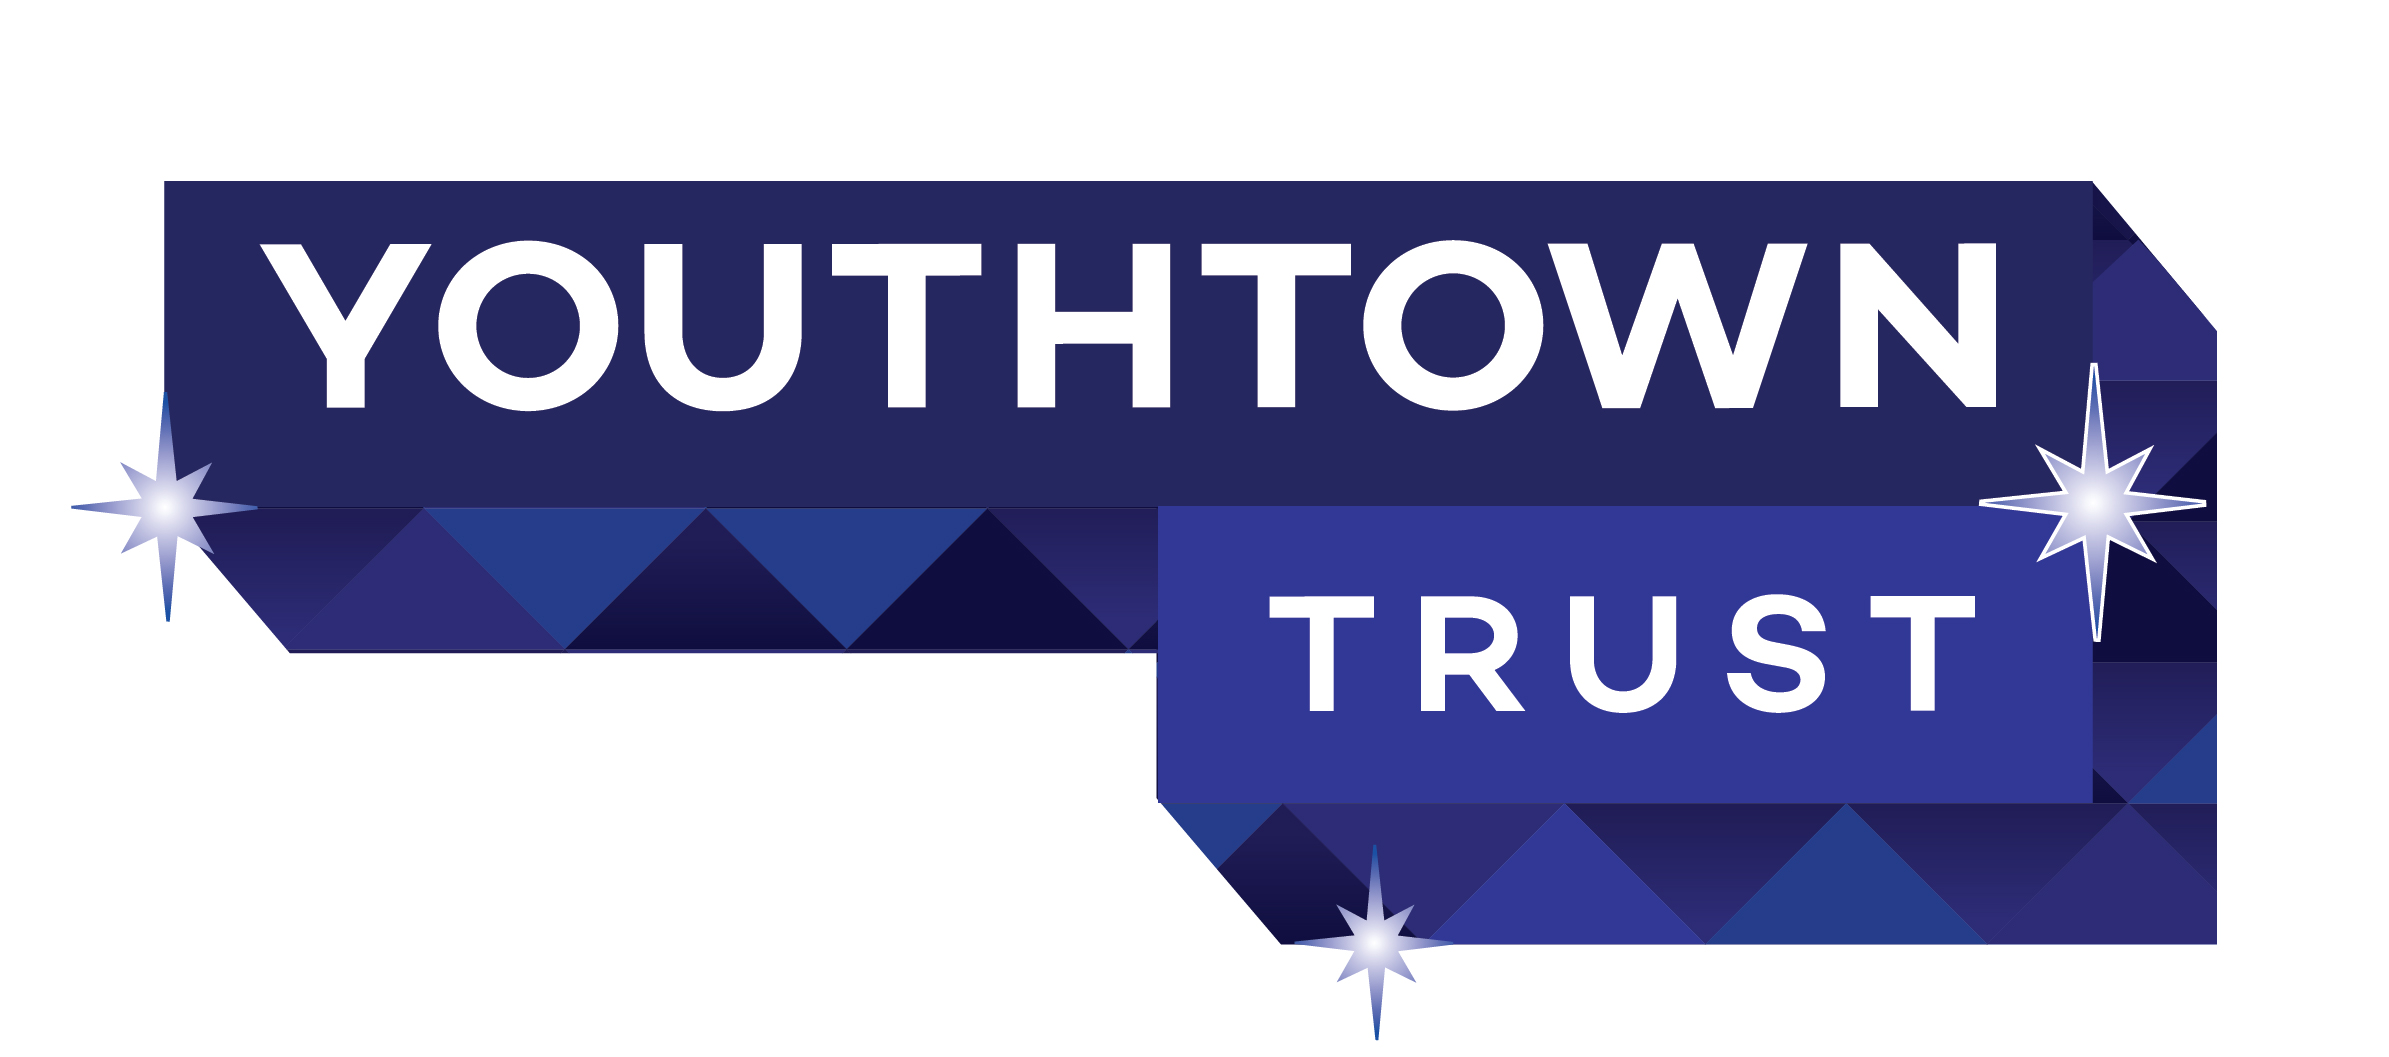 Youthtown Trust Venue Compliance Assessment vAug23 1.4A